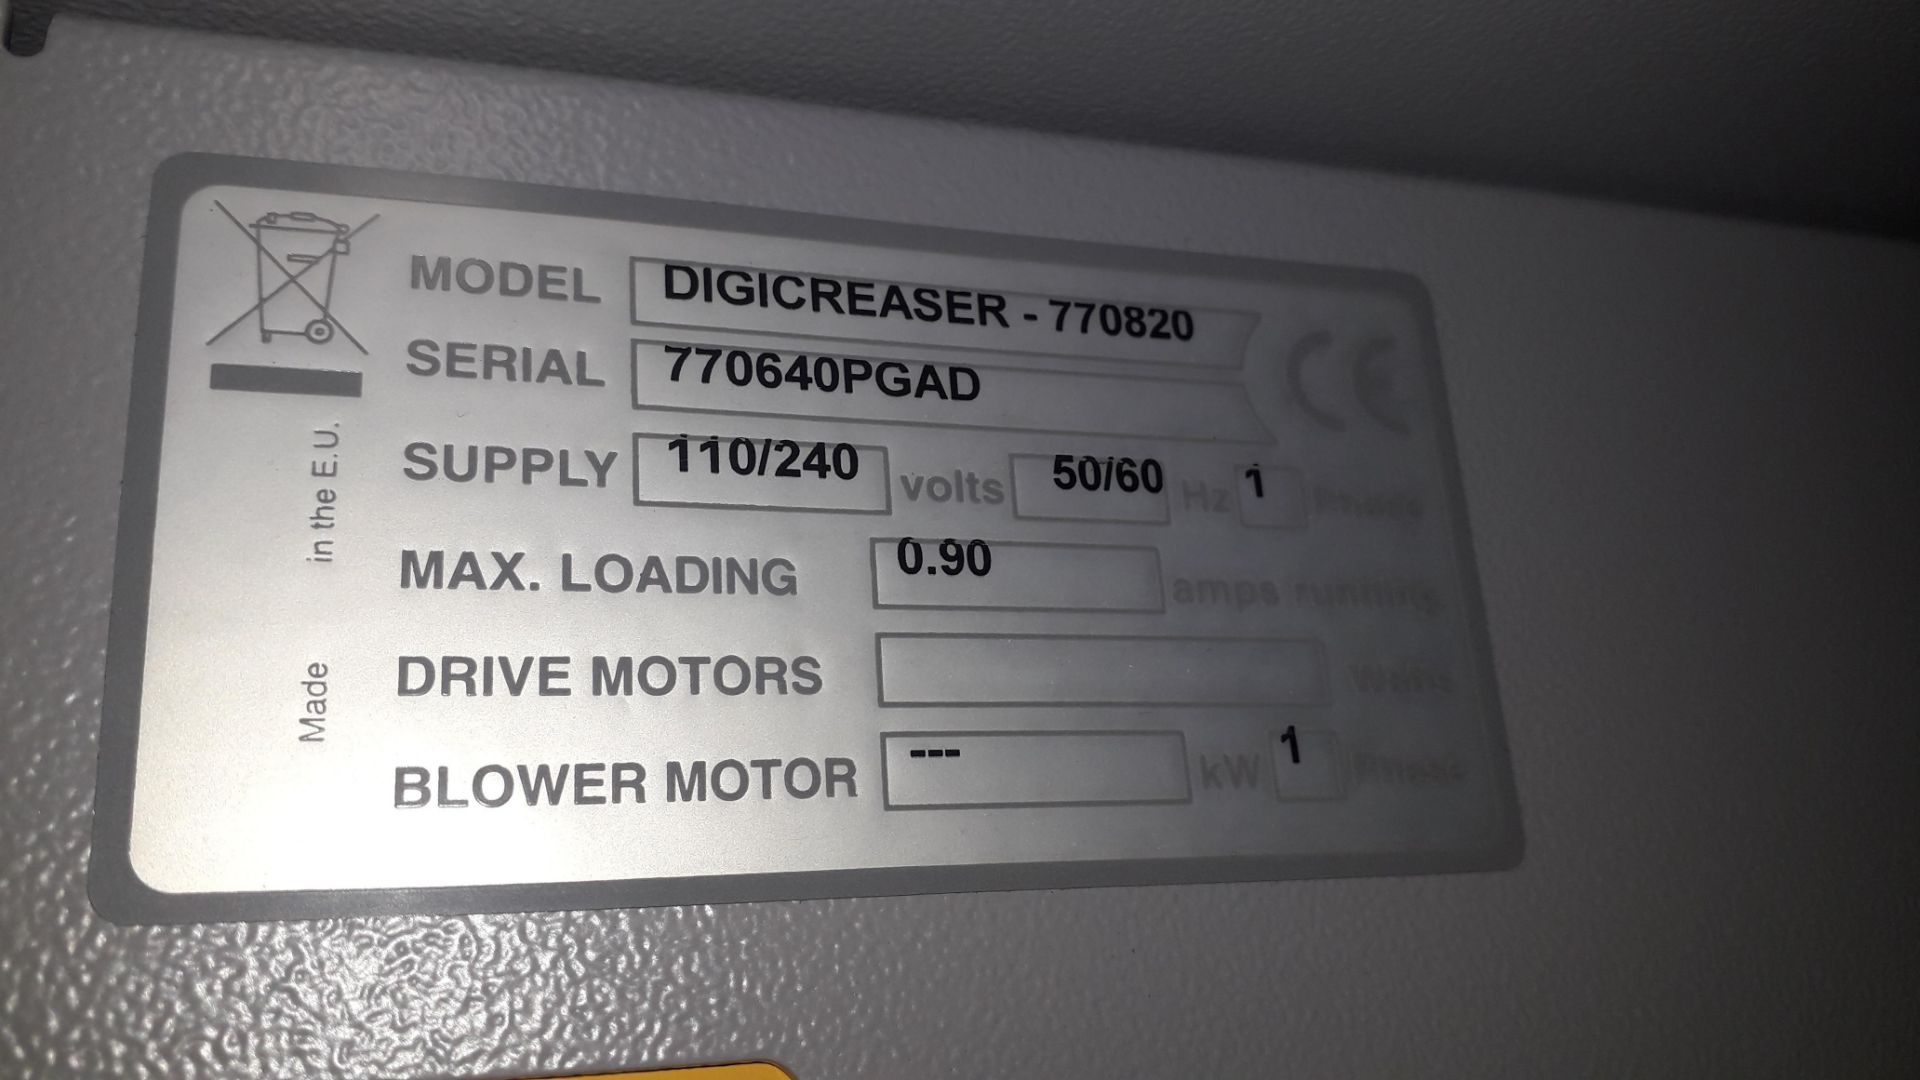 Morgana Digicreaser 770820 creaser, S/N 770640PGAD - Image 3 of 3